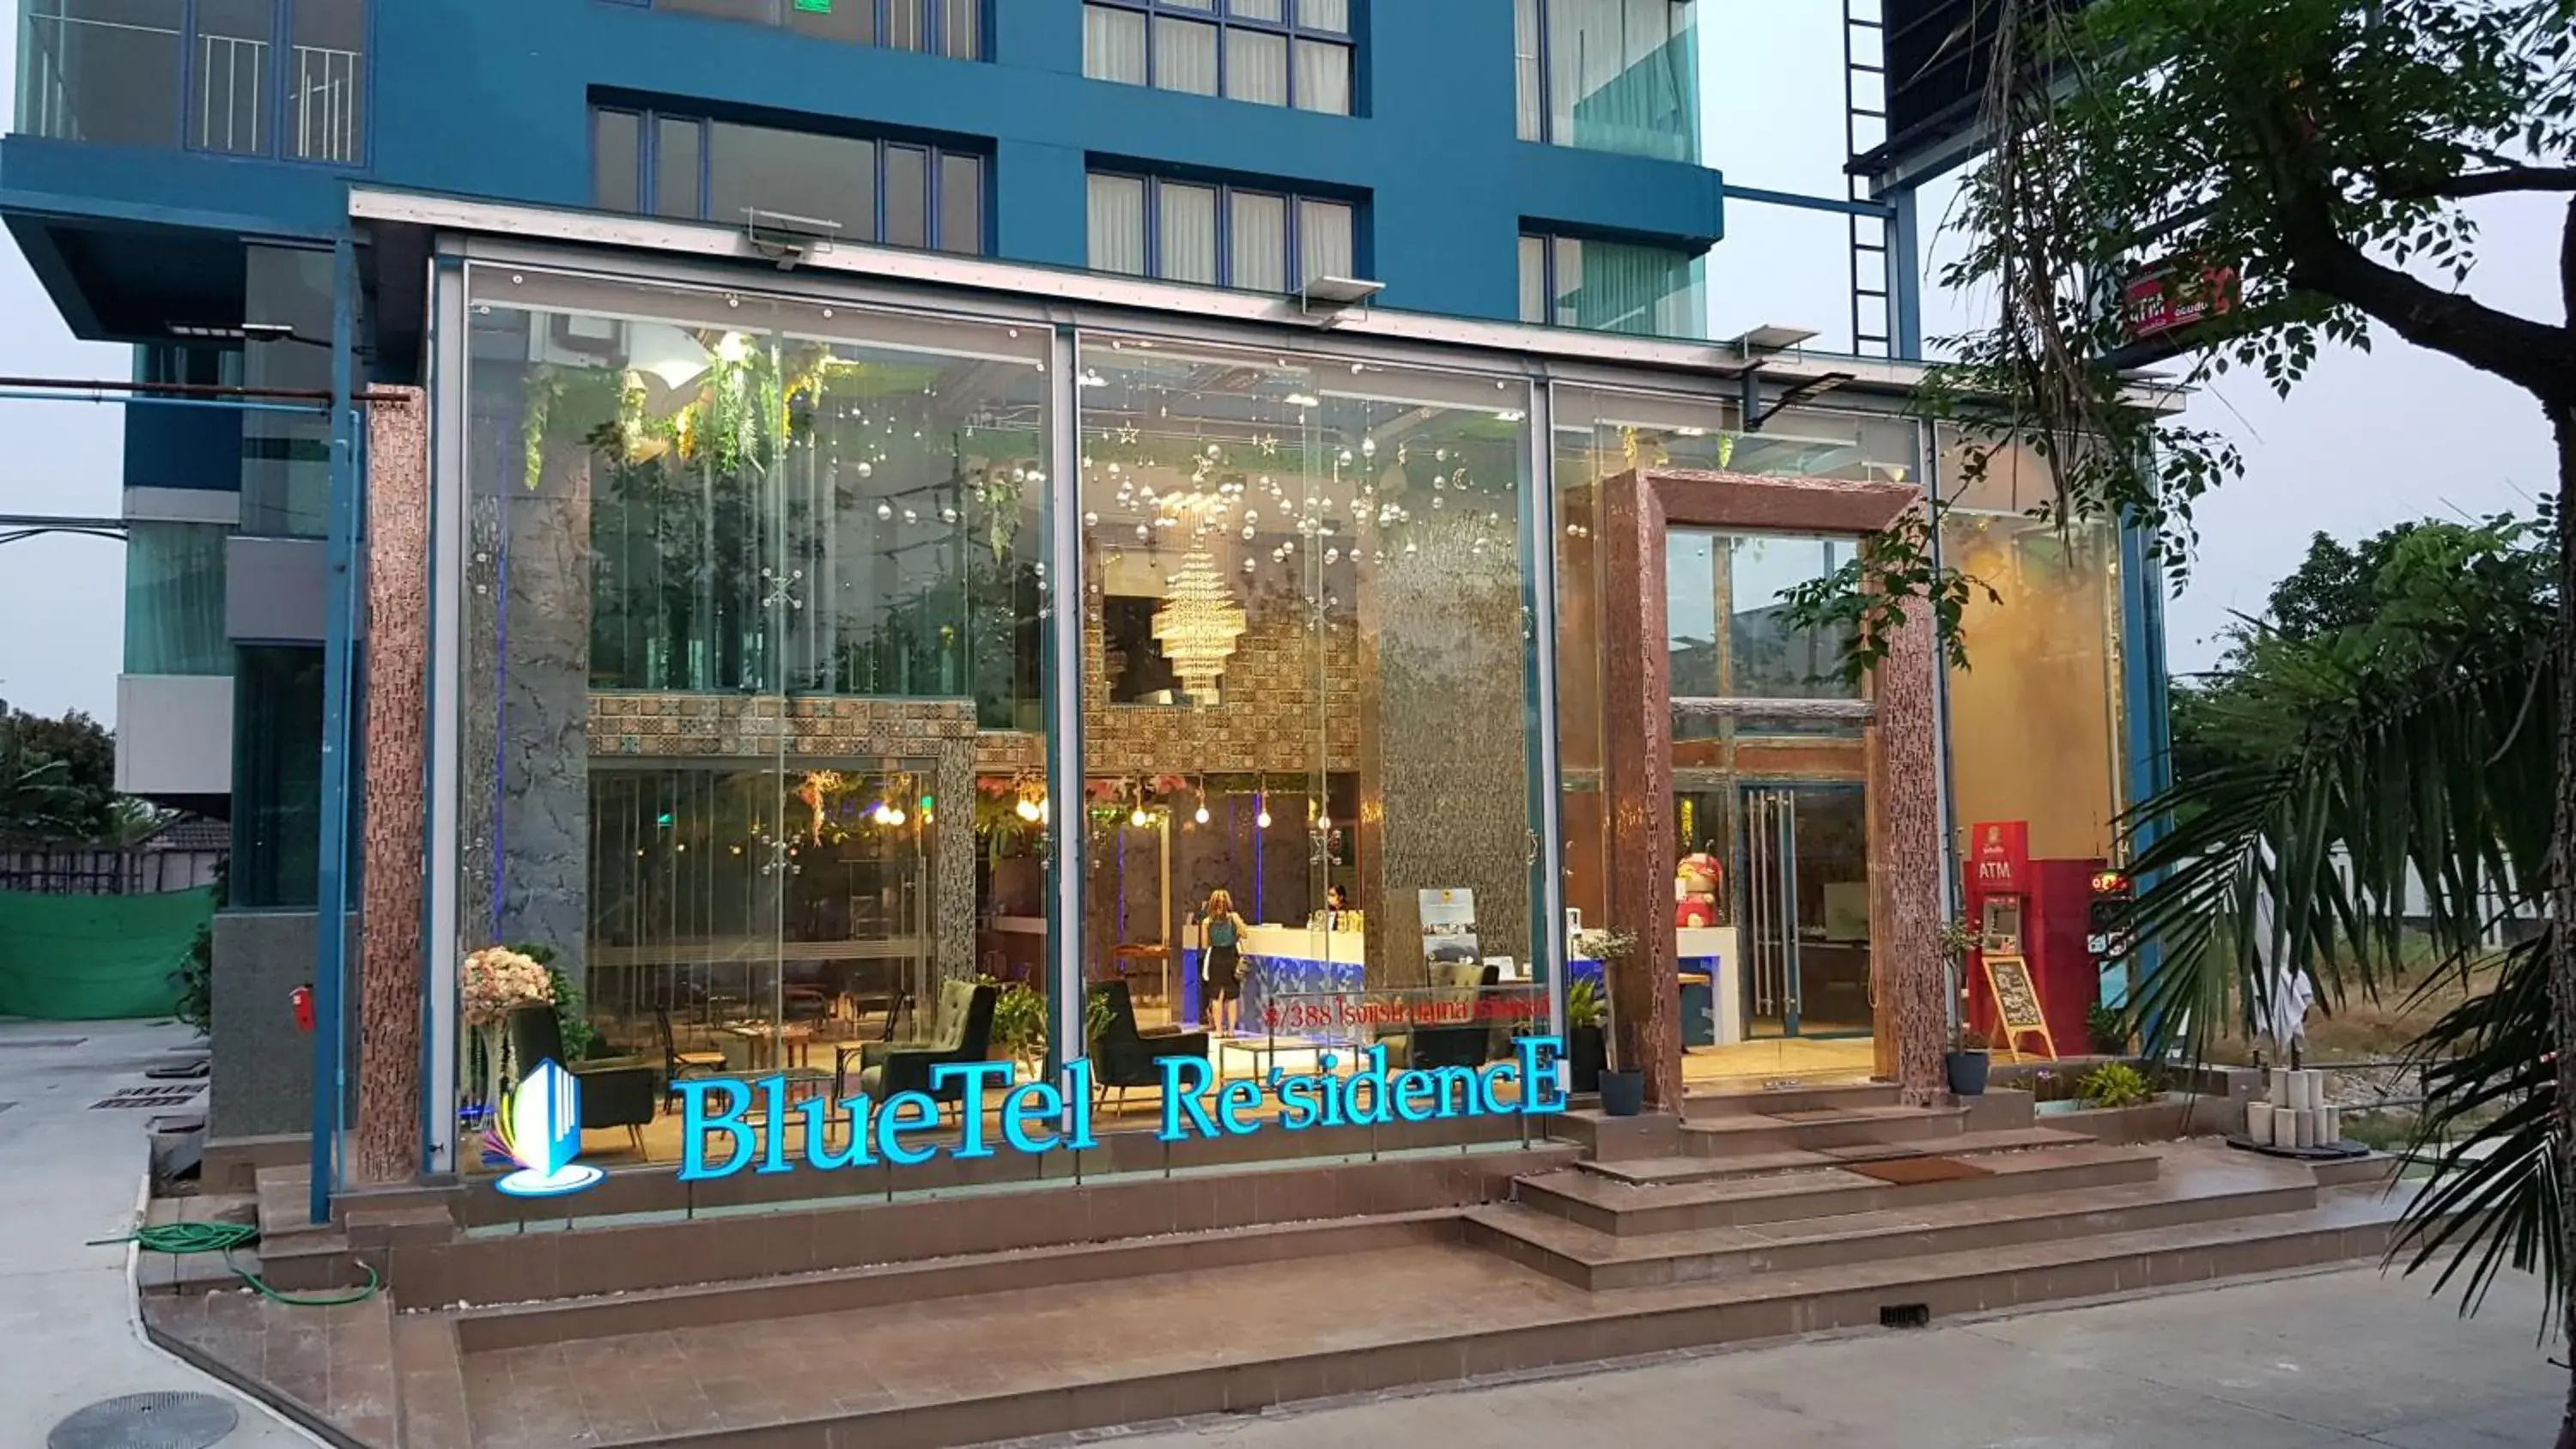 BlueTel Re'sidencE Bangkok IMPACT- 1 Time Drop-Off Service to IMPACT